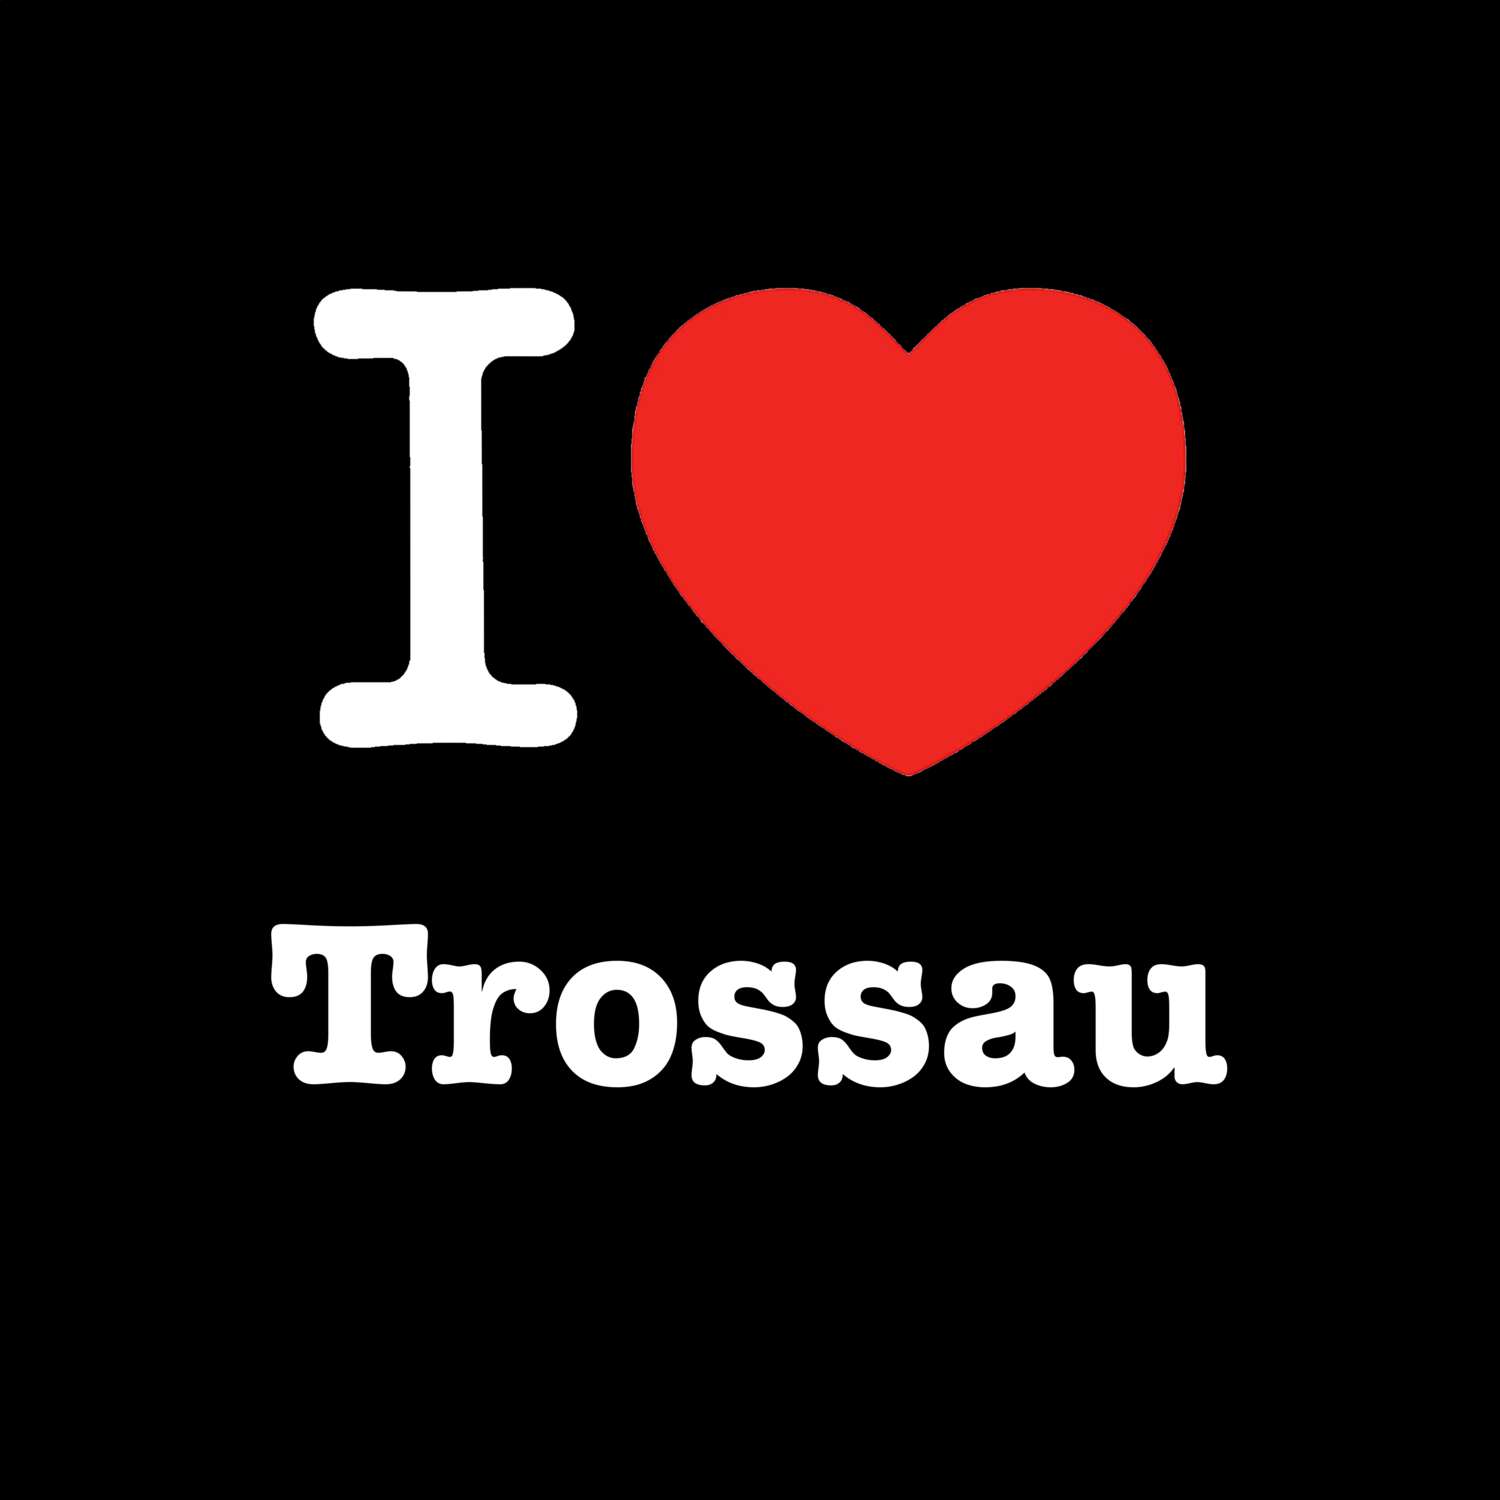 Trossau T-Shirt »I love«